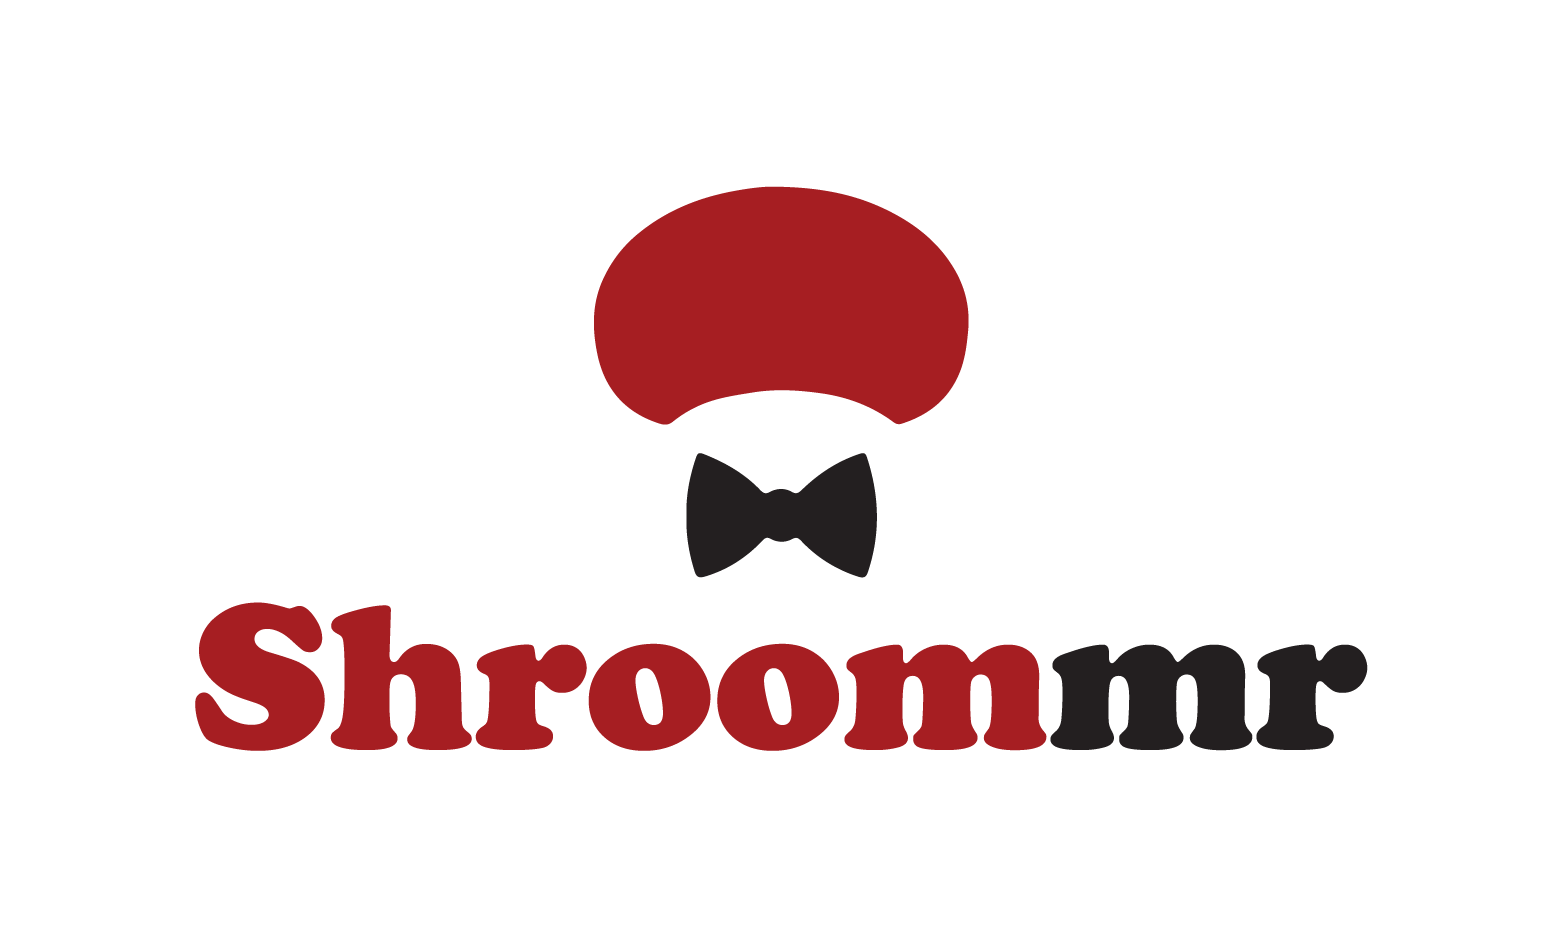 Shroommr.com - Creative brandable domain for sale